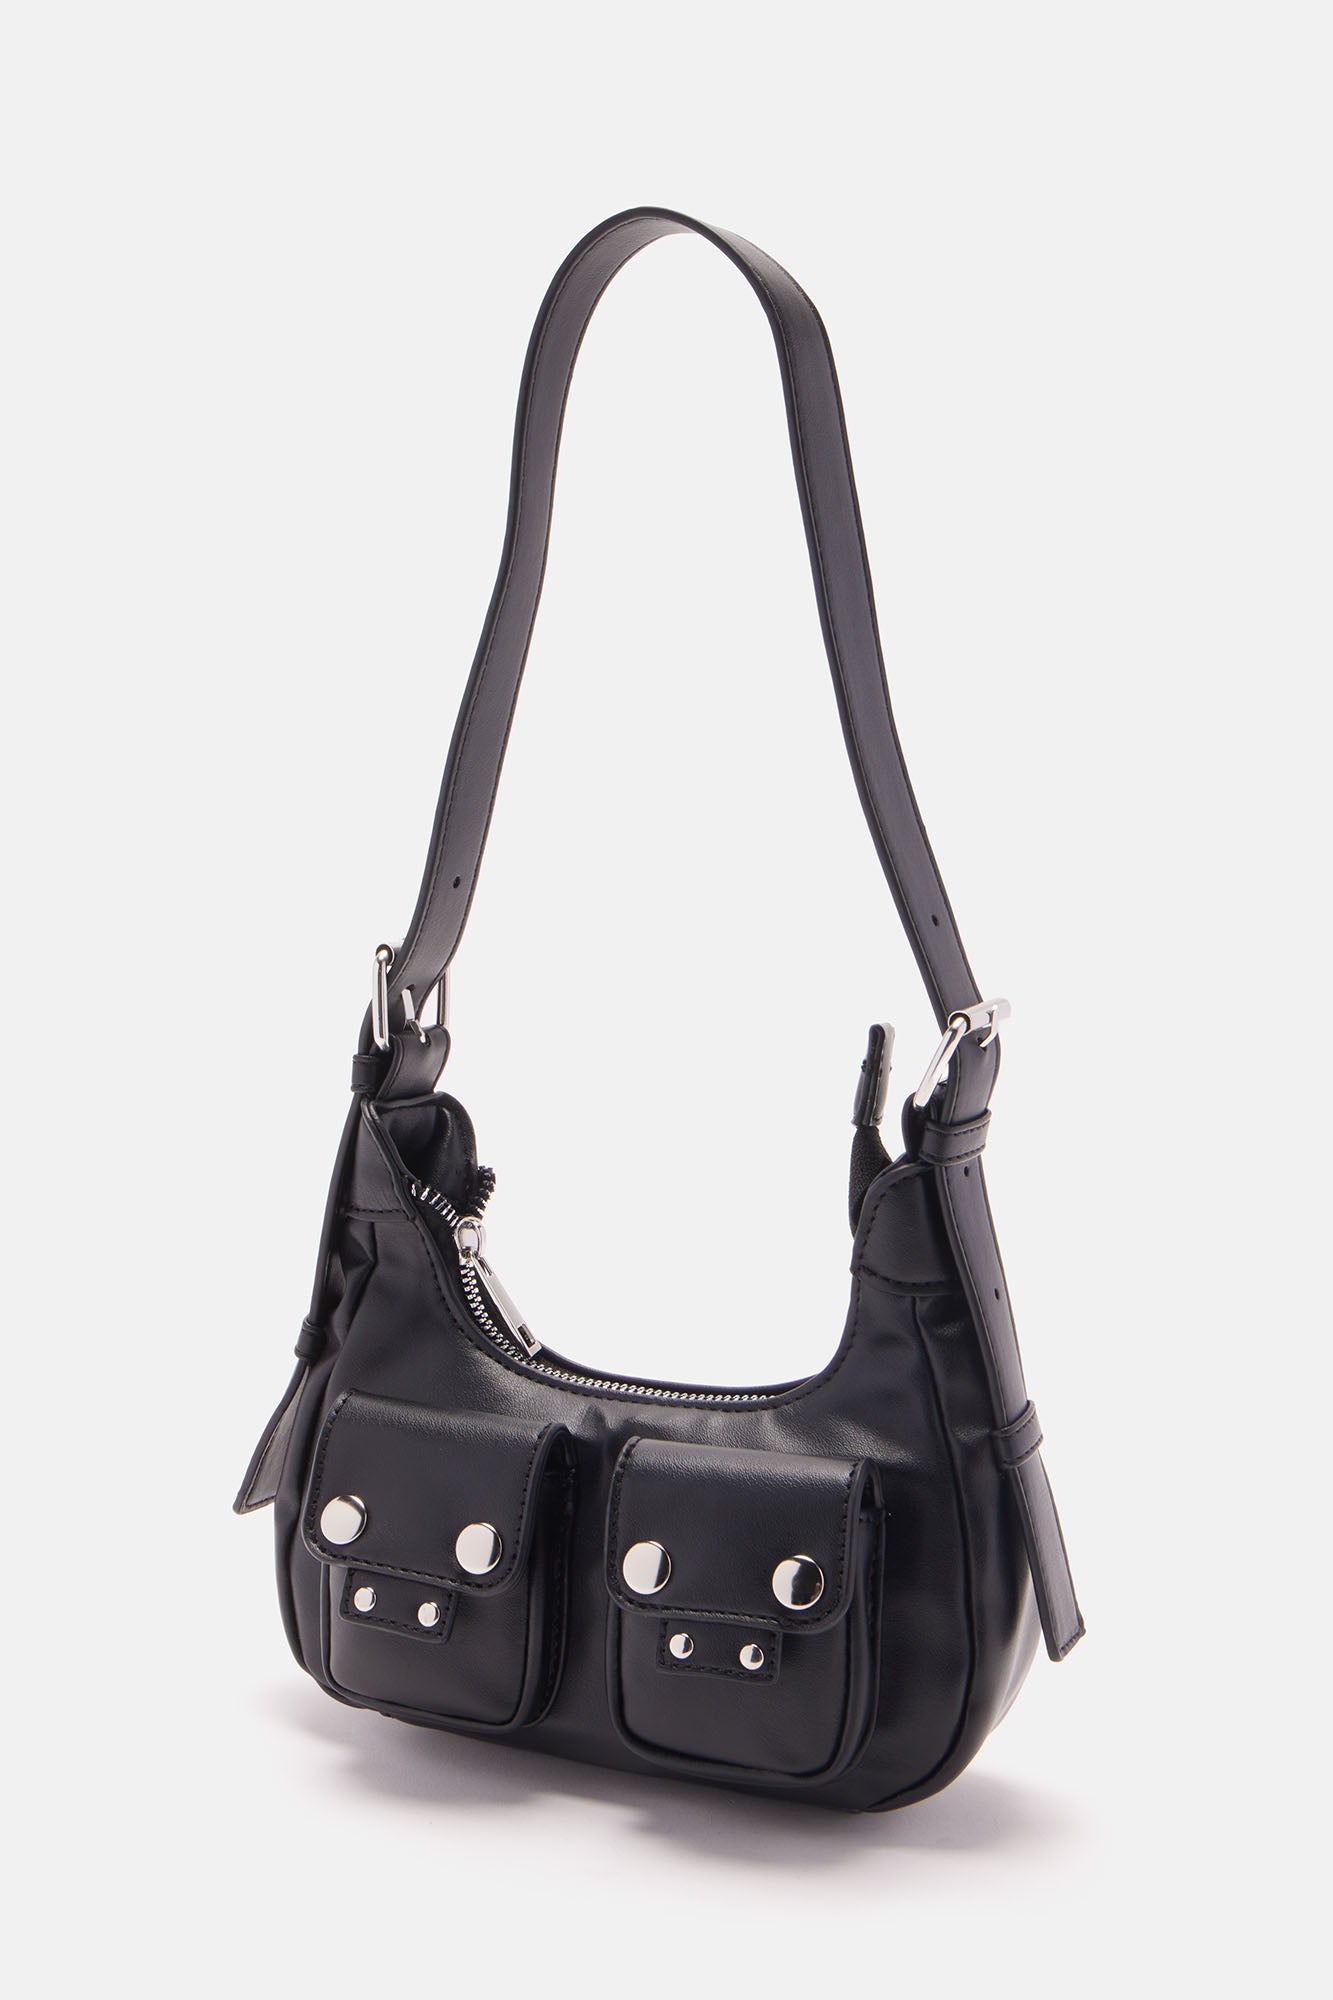 Midnight Chic: The Mini Rider Handbag in Black